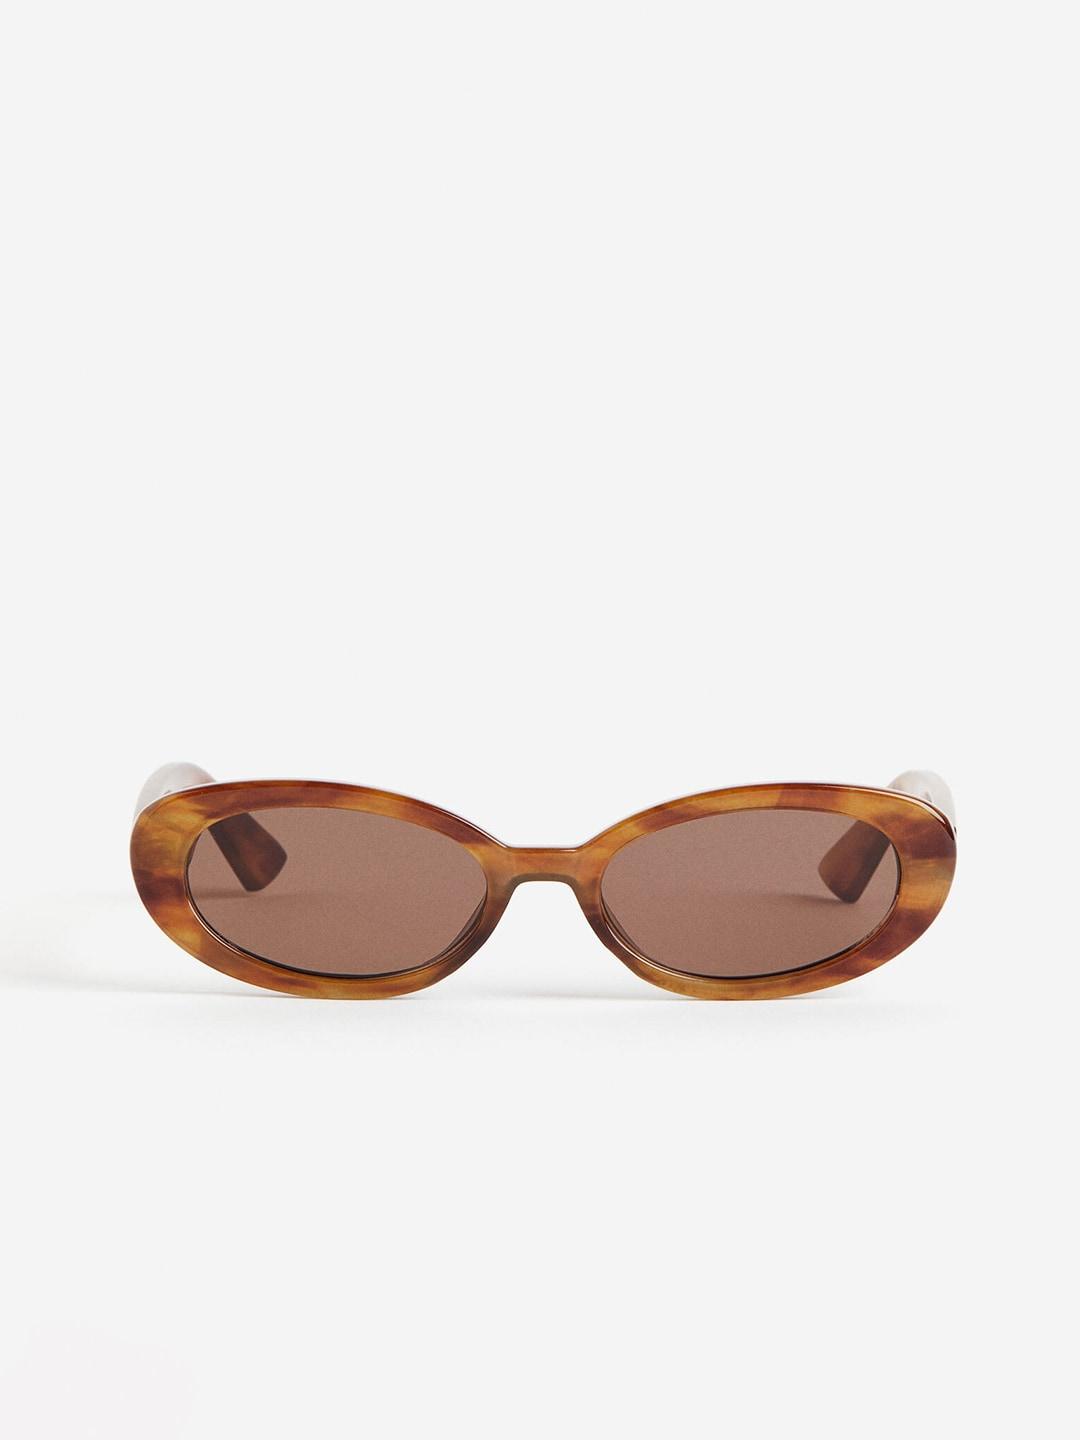 h&m oval sunglasses